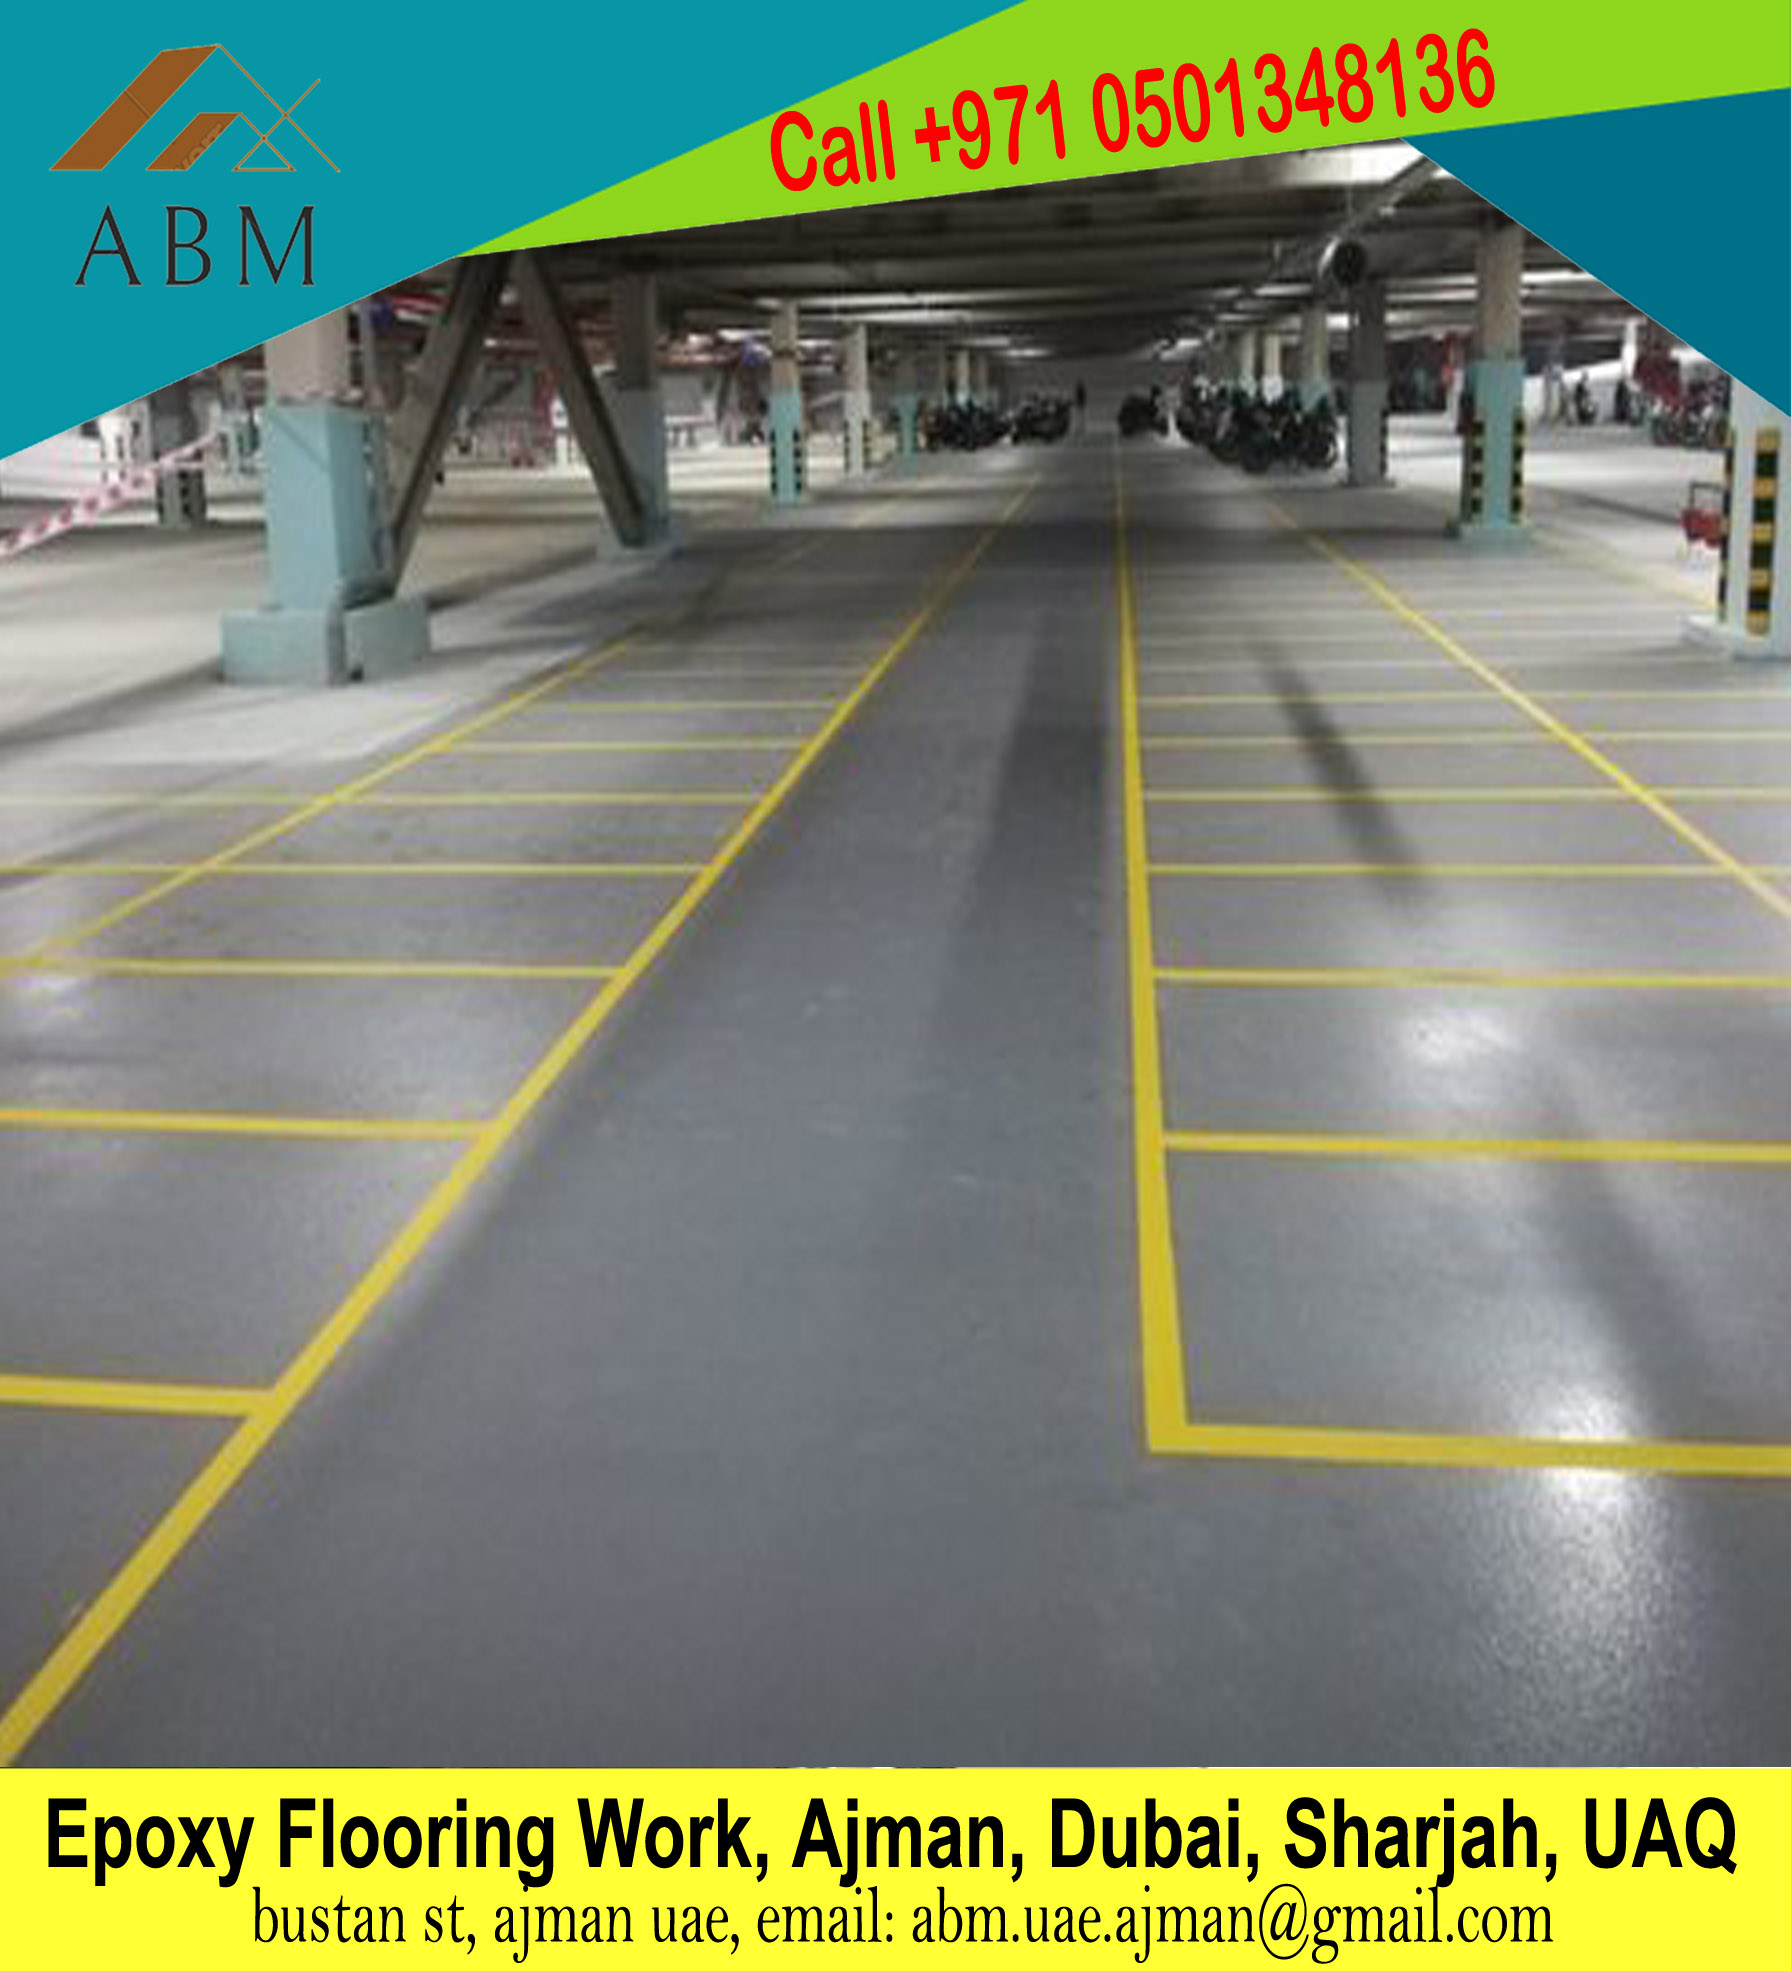 Professional Epoxy Flooring works Company Ajman